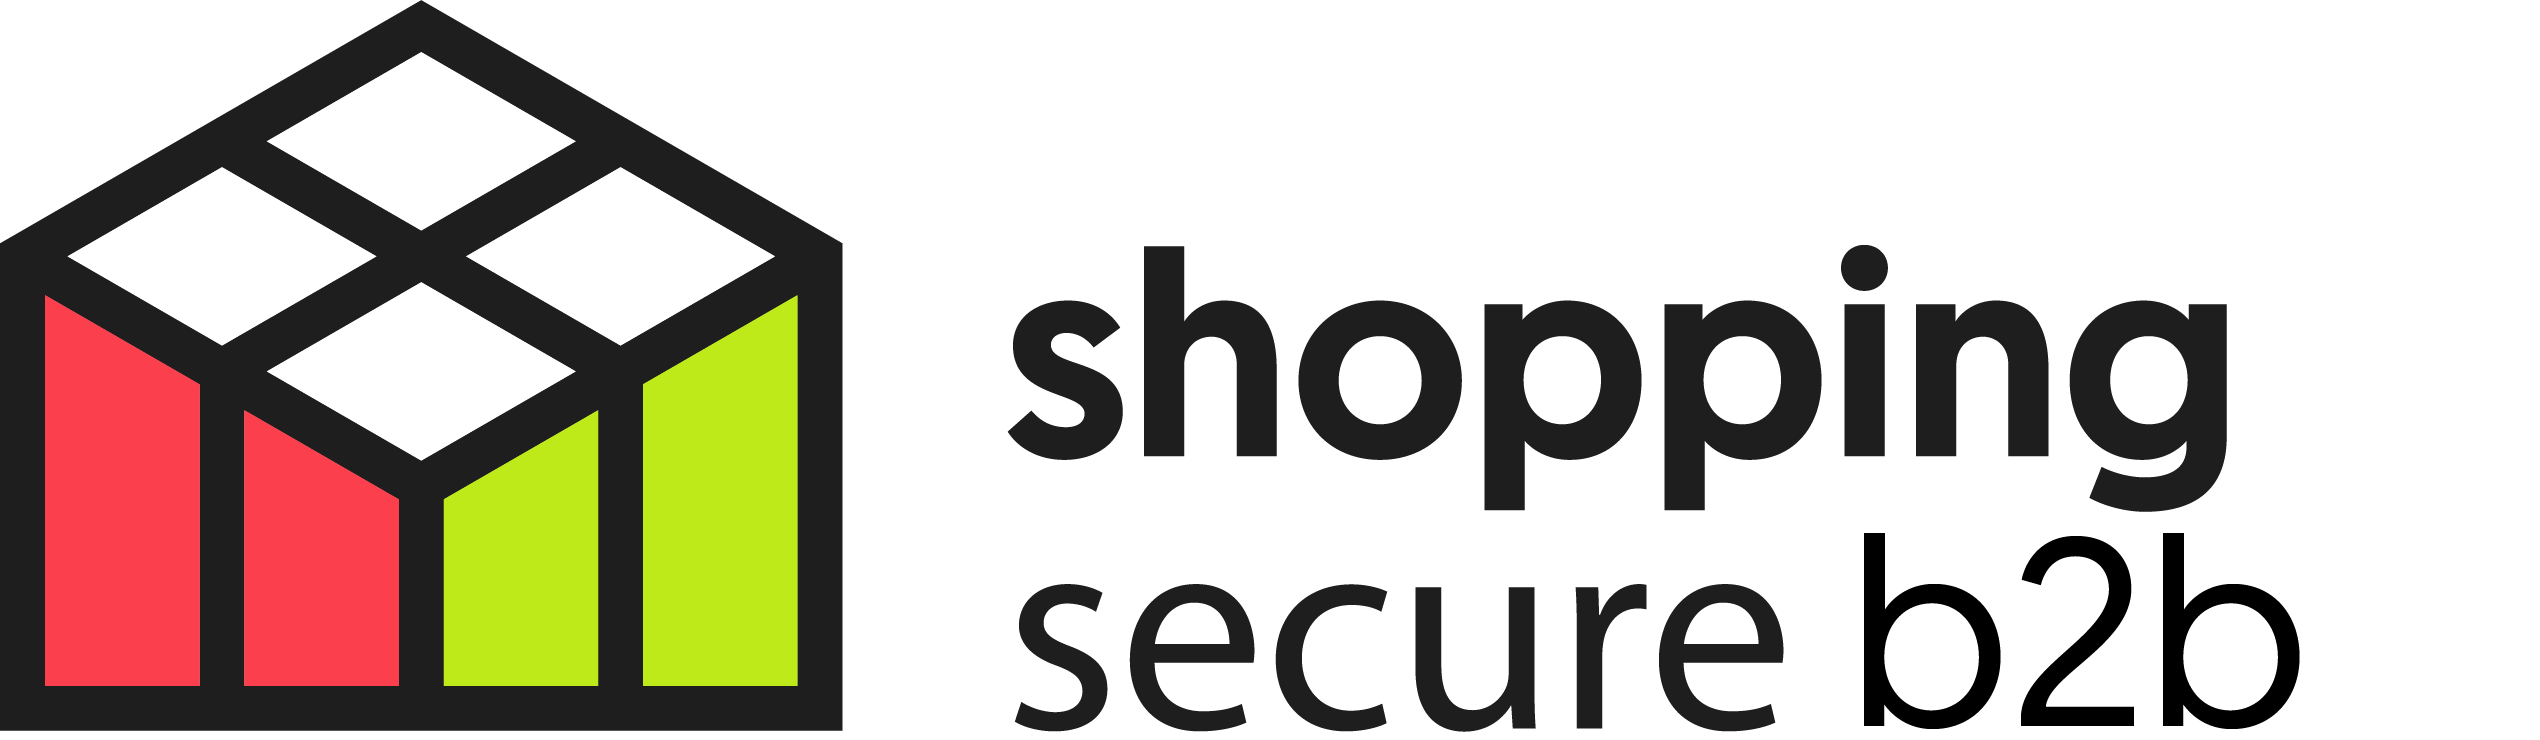 Shopping_Secureb2b_horizontaal_Kleur